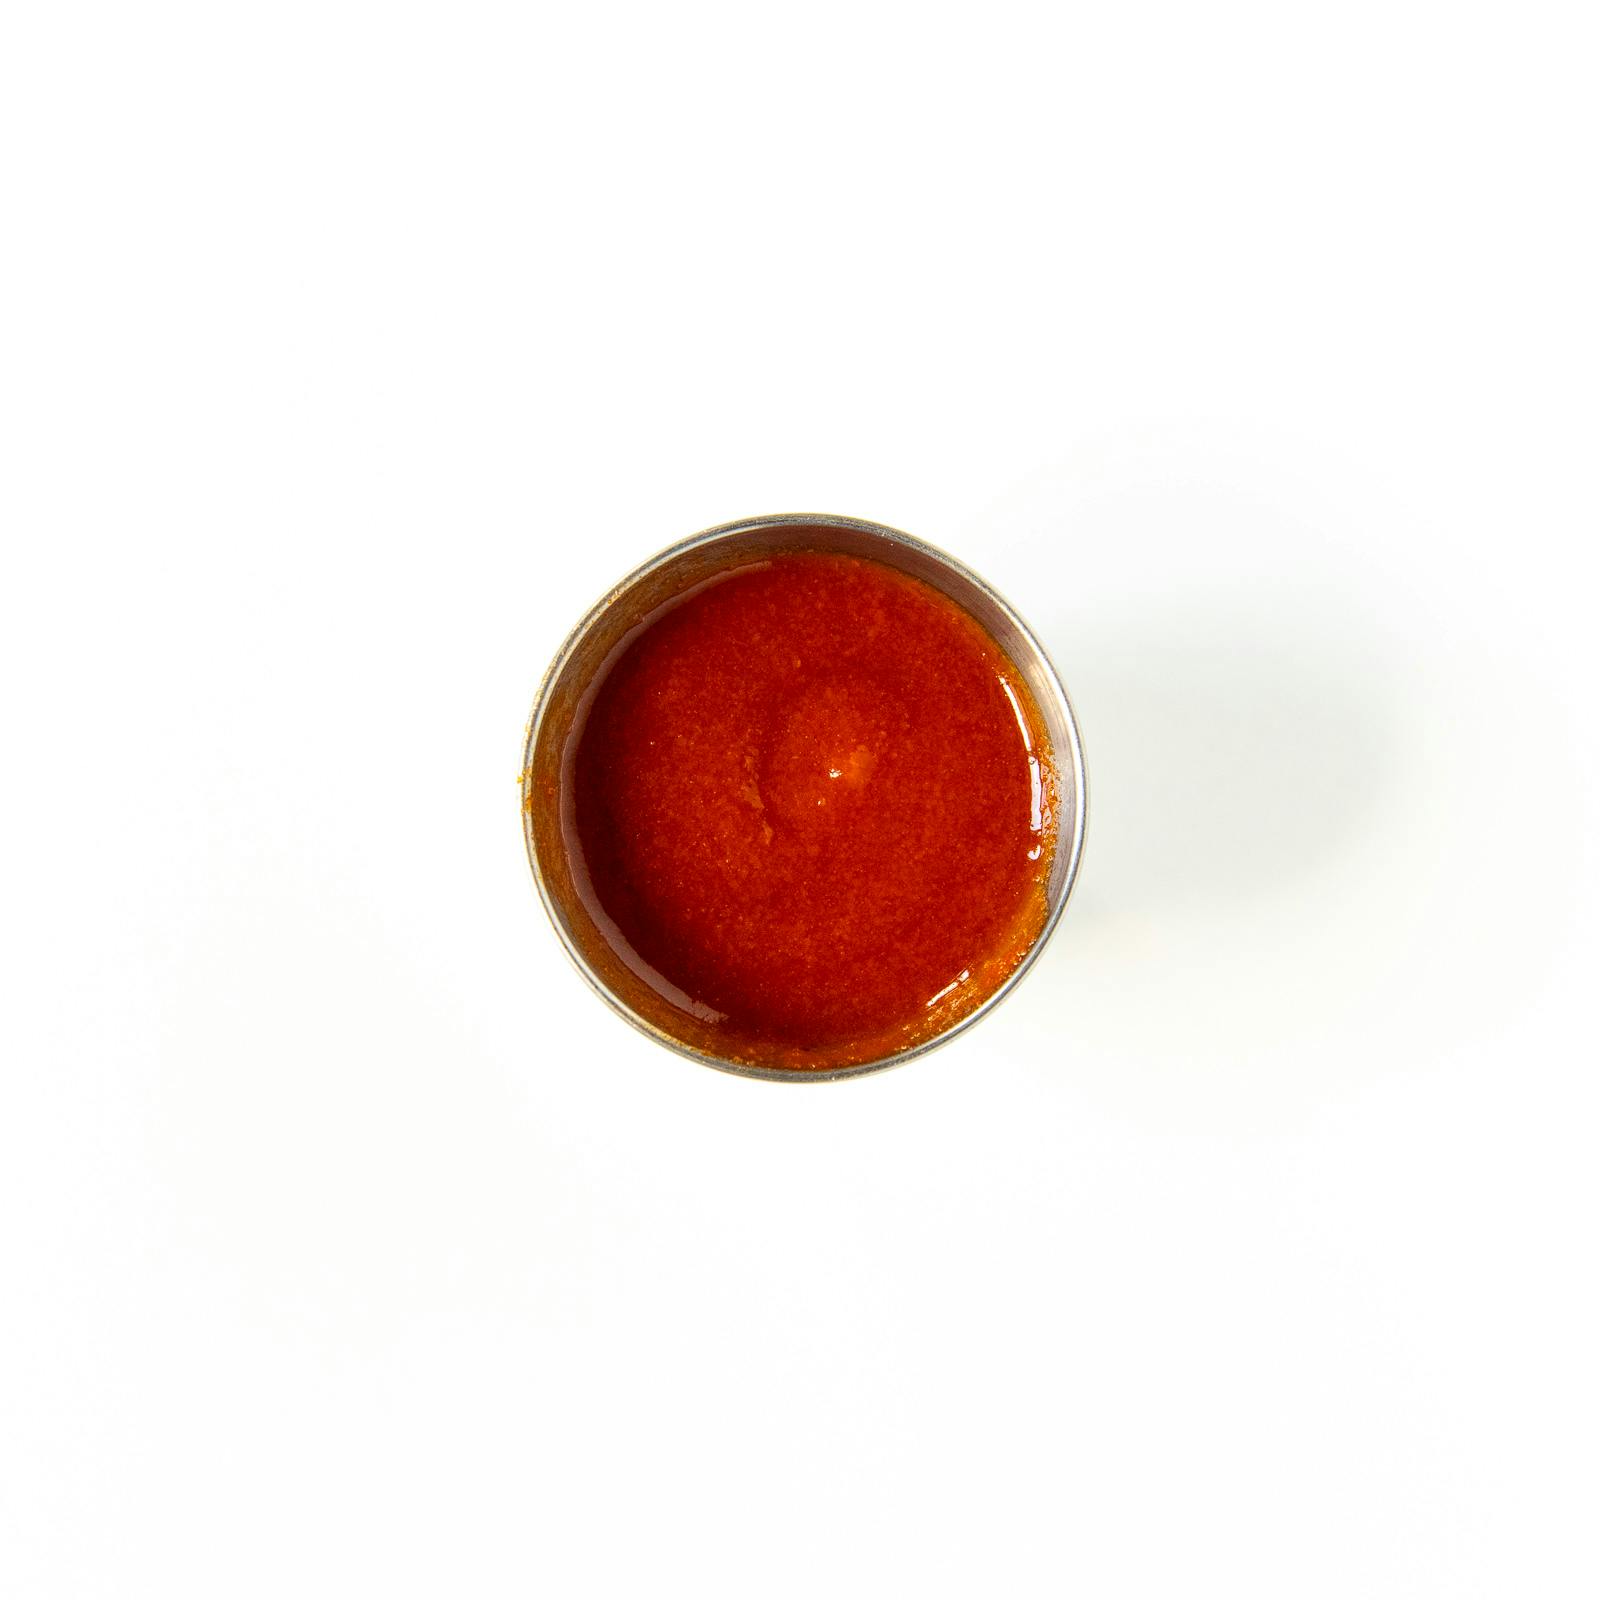 Honey Garlic Sriracha Sauce from Midcoast Wings - University Ave in Cedar Falls, IA